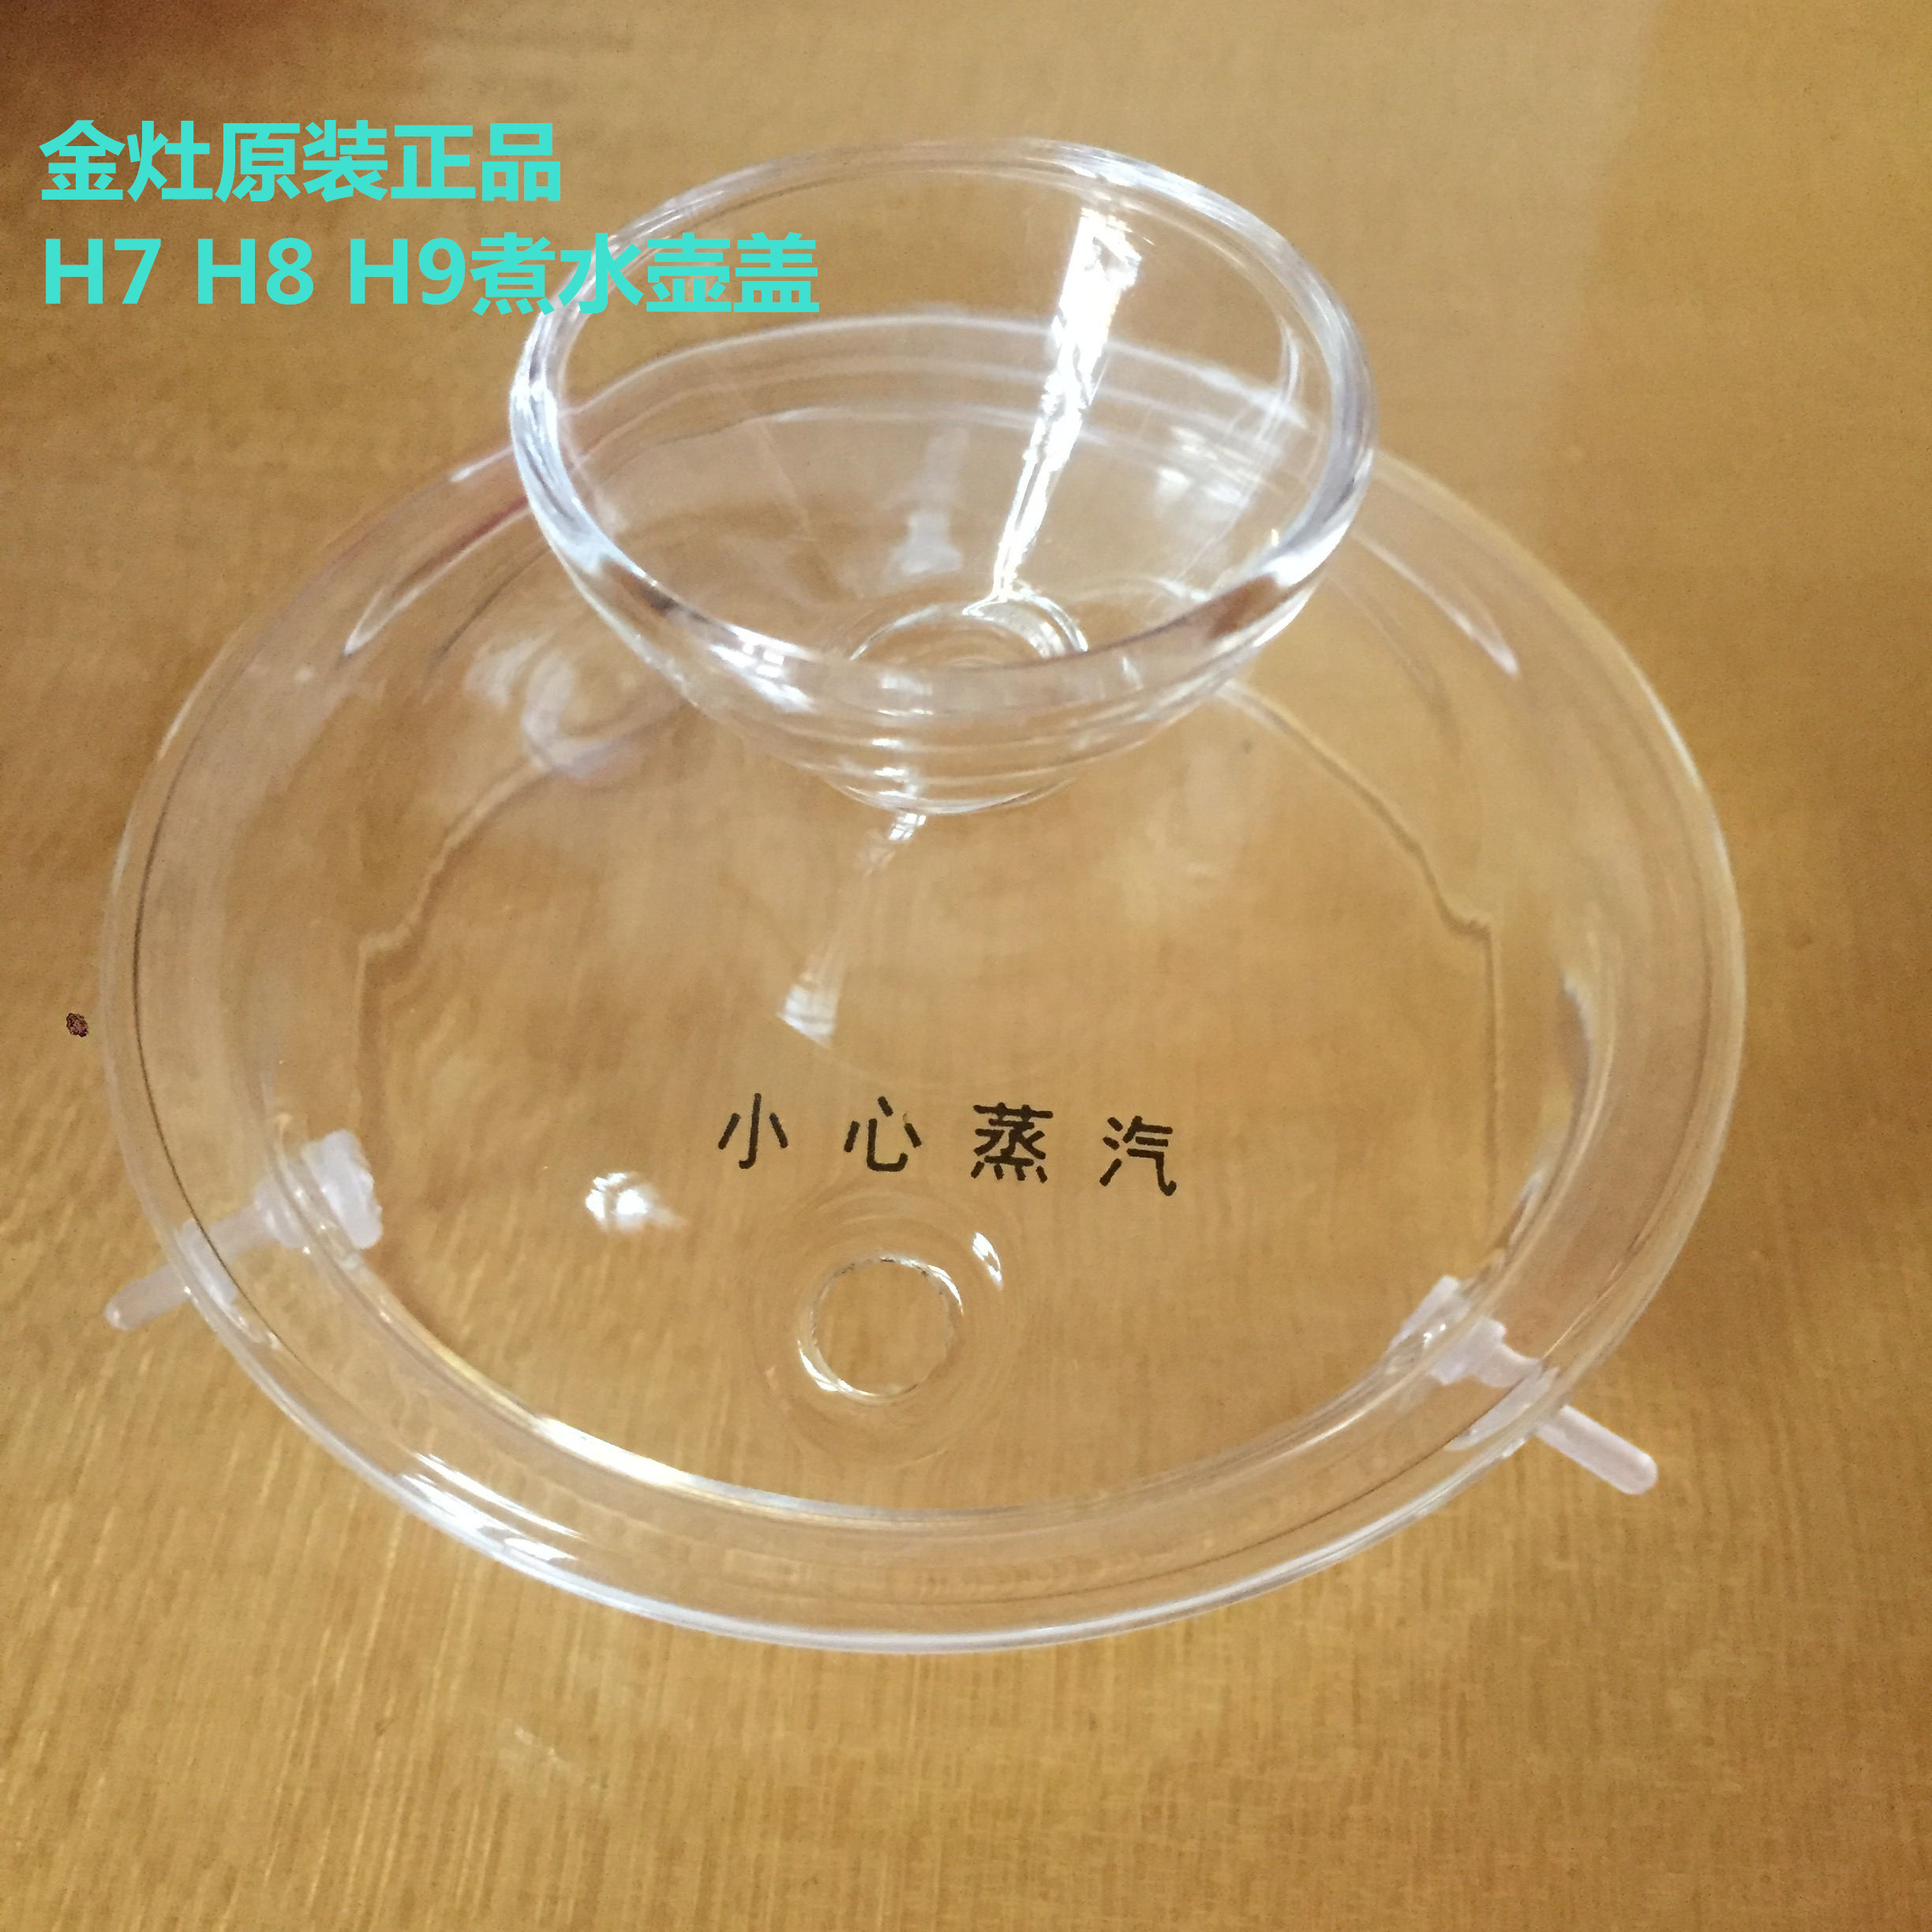 KAMJOVE/金灶H7 H8 H9玻璃茶壶盖子煮水烧水壶锅盖原厂配件原装